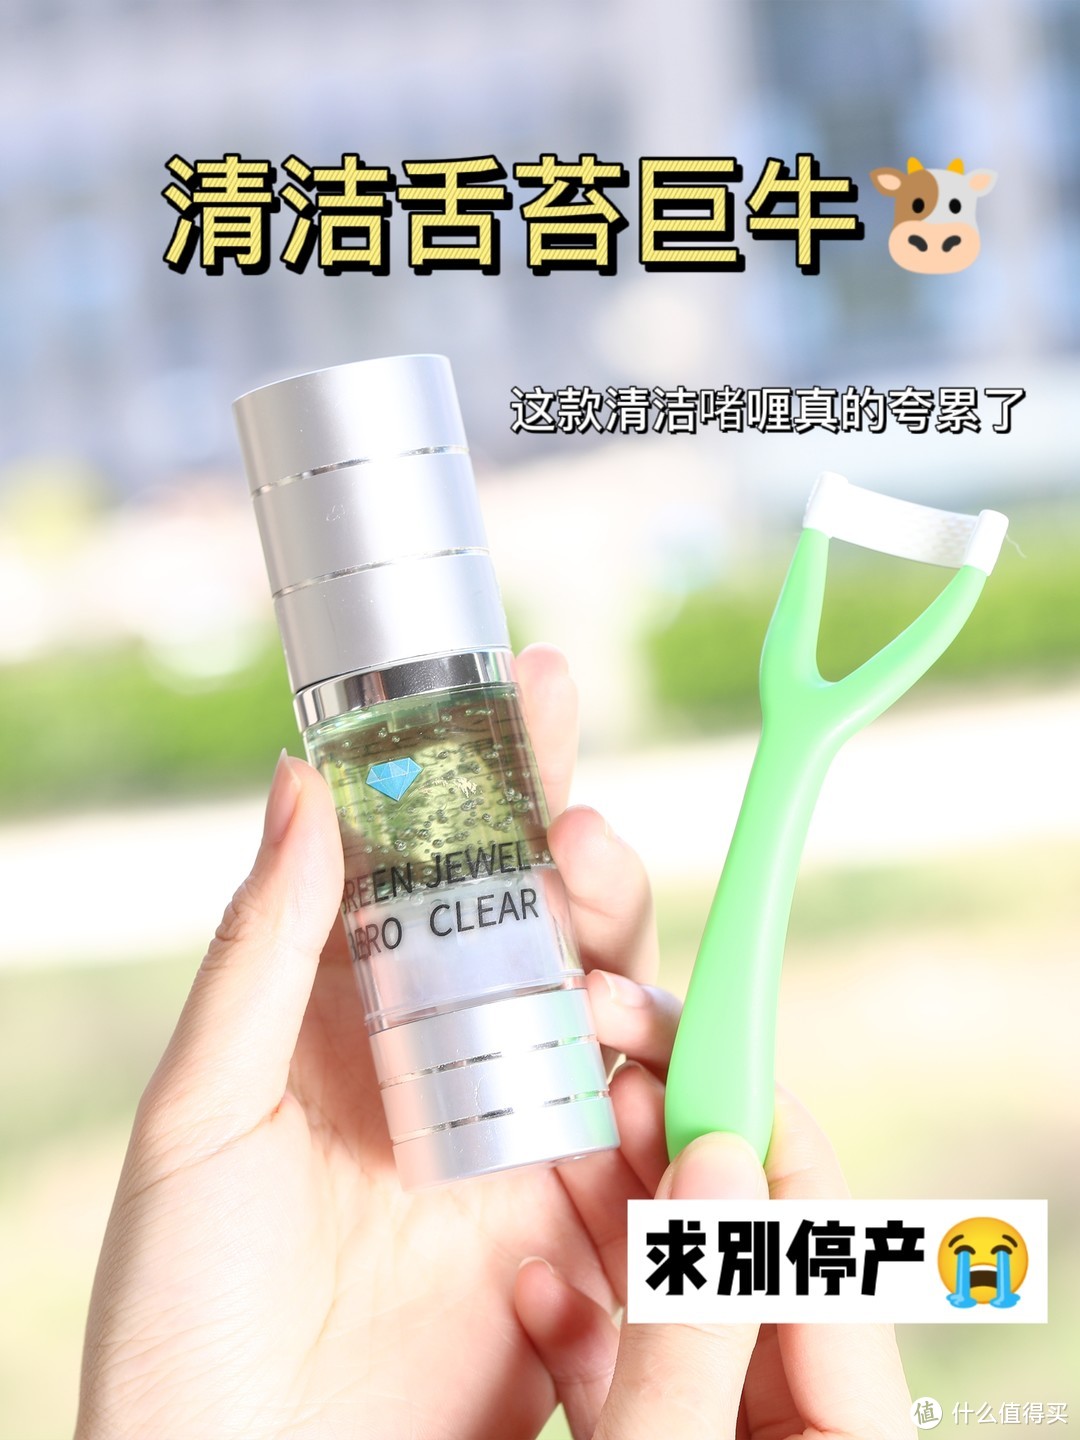 【Green Jewel 】日本限购的平价口腔清洁好物分享